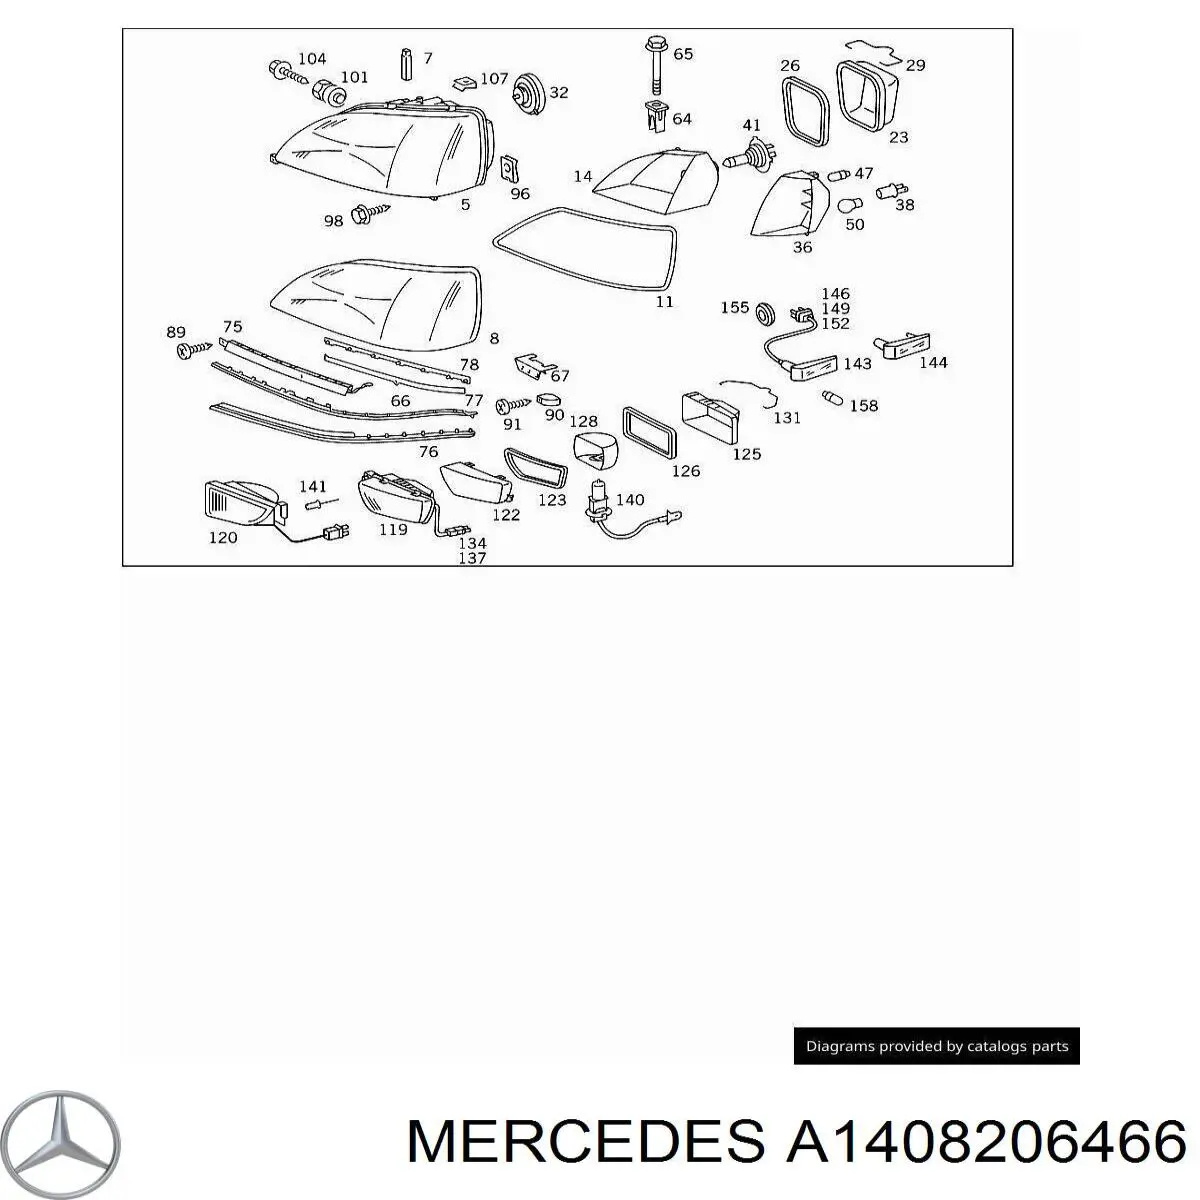 A1408206466 Mercedes cristal de faro derecho